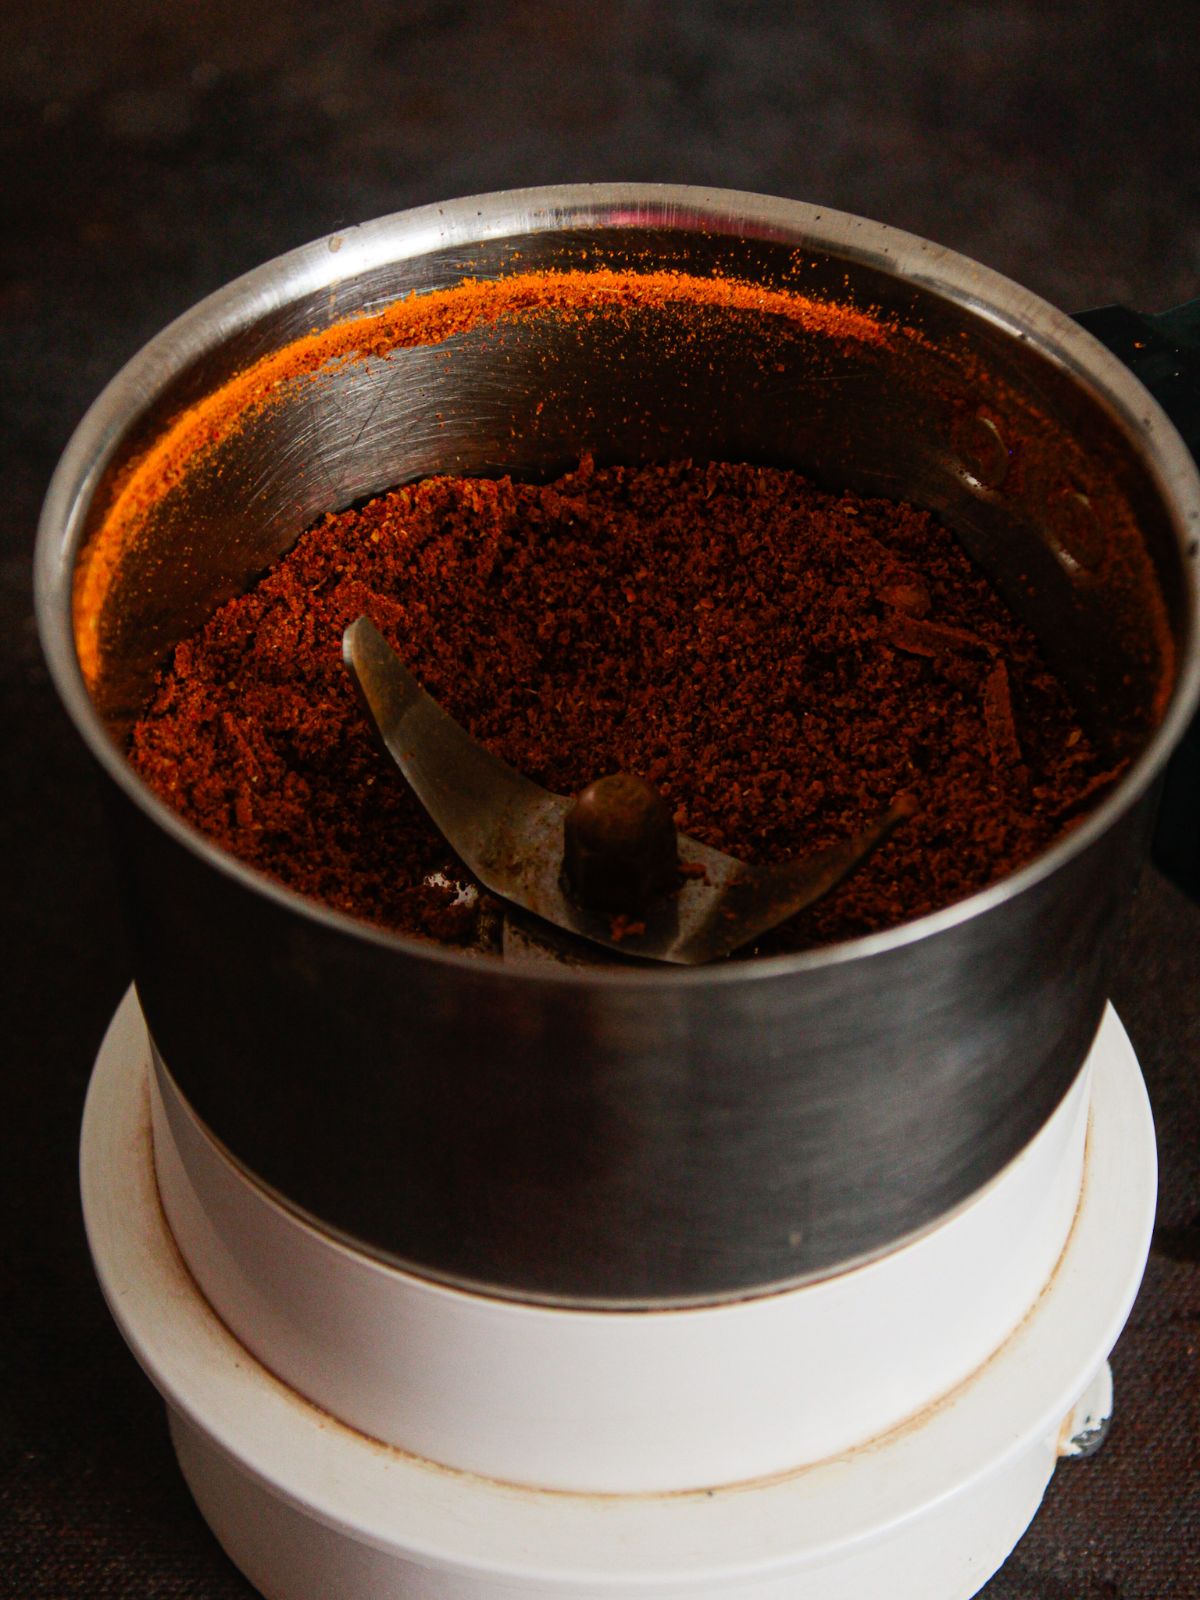 spice grinder of madras curry powder